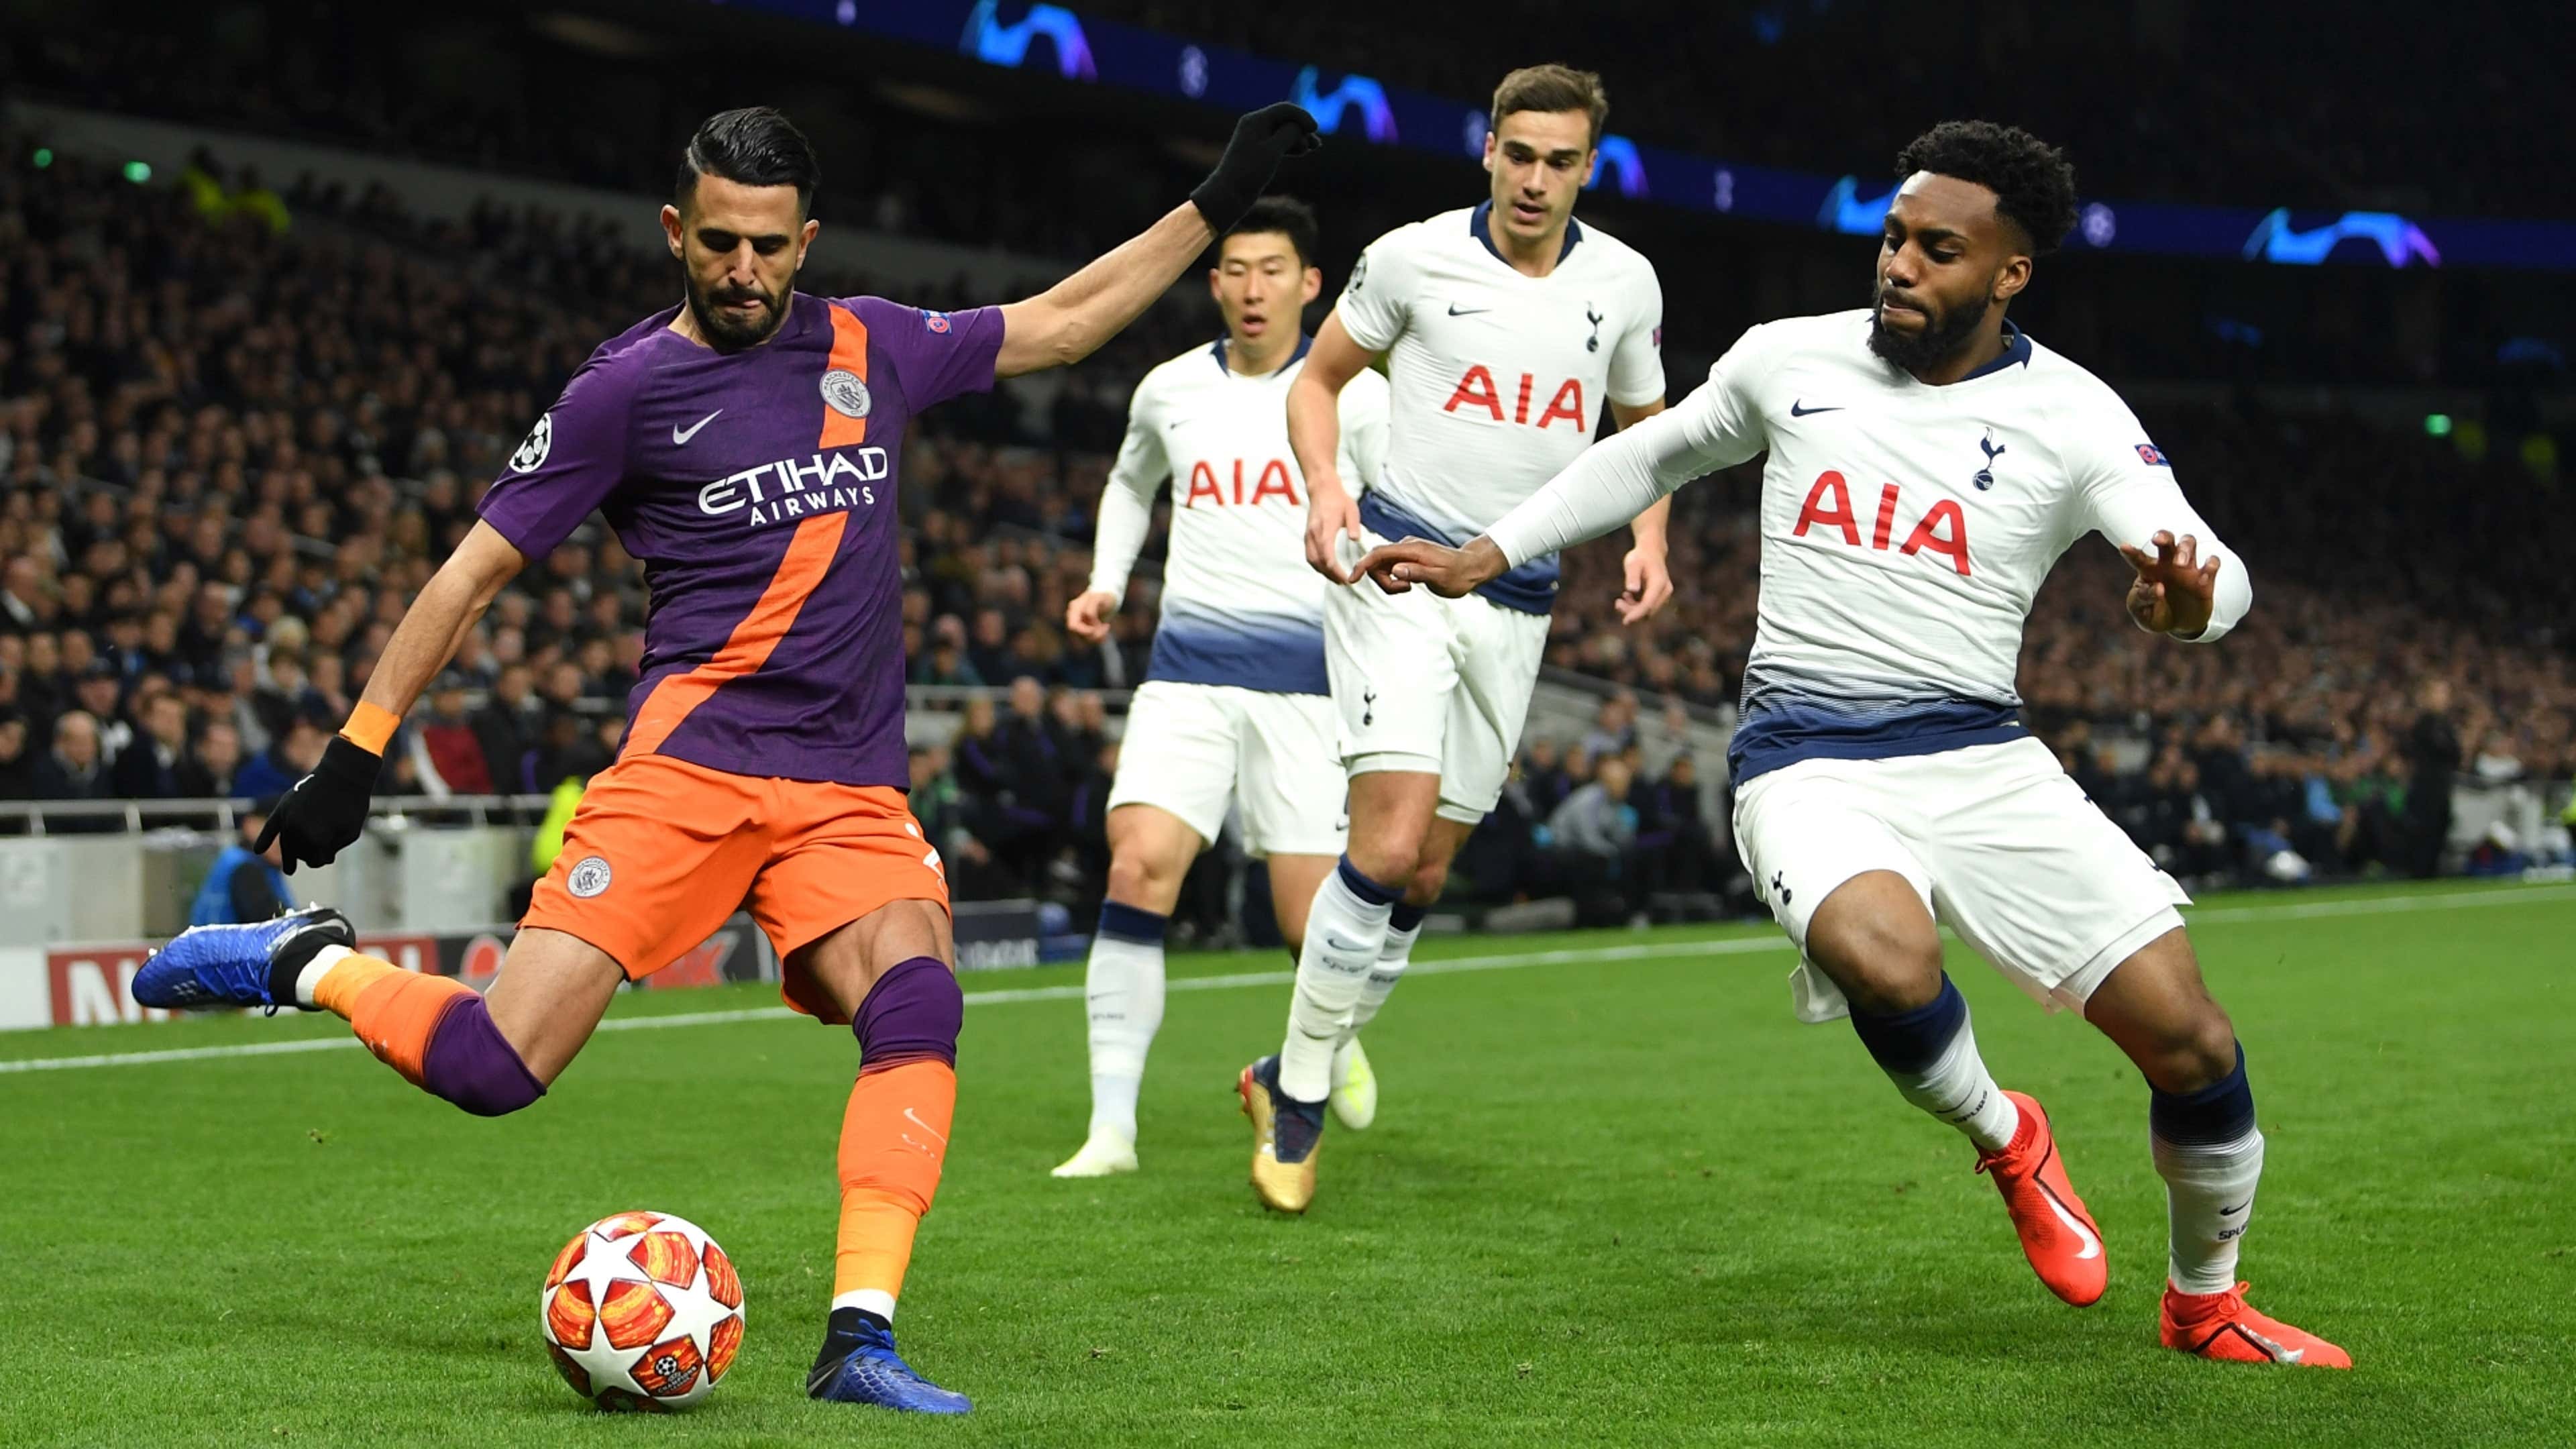 Riyad Mahrez, Tottenham vs Man City, UCL 2018-19